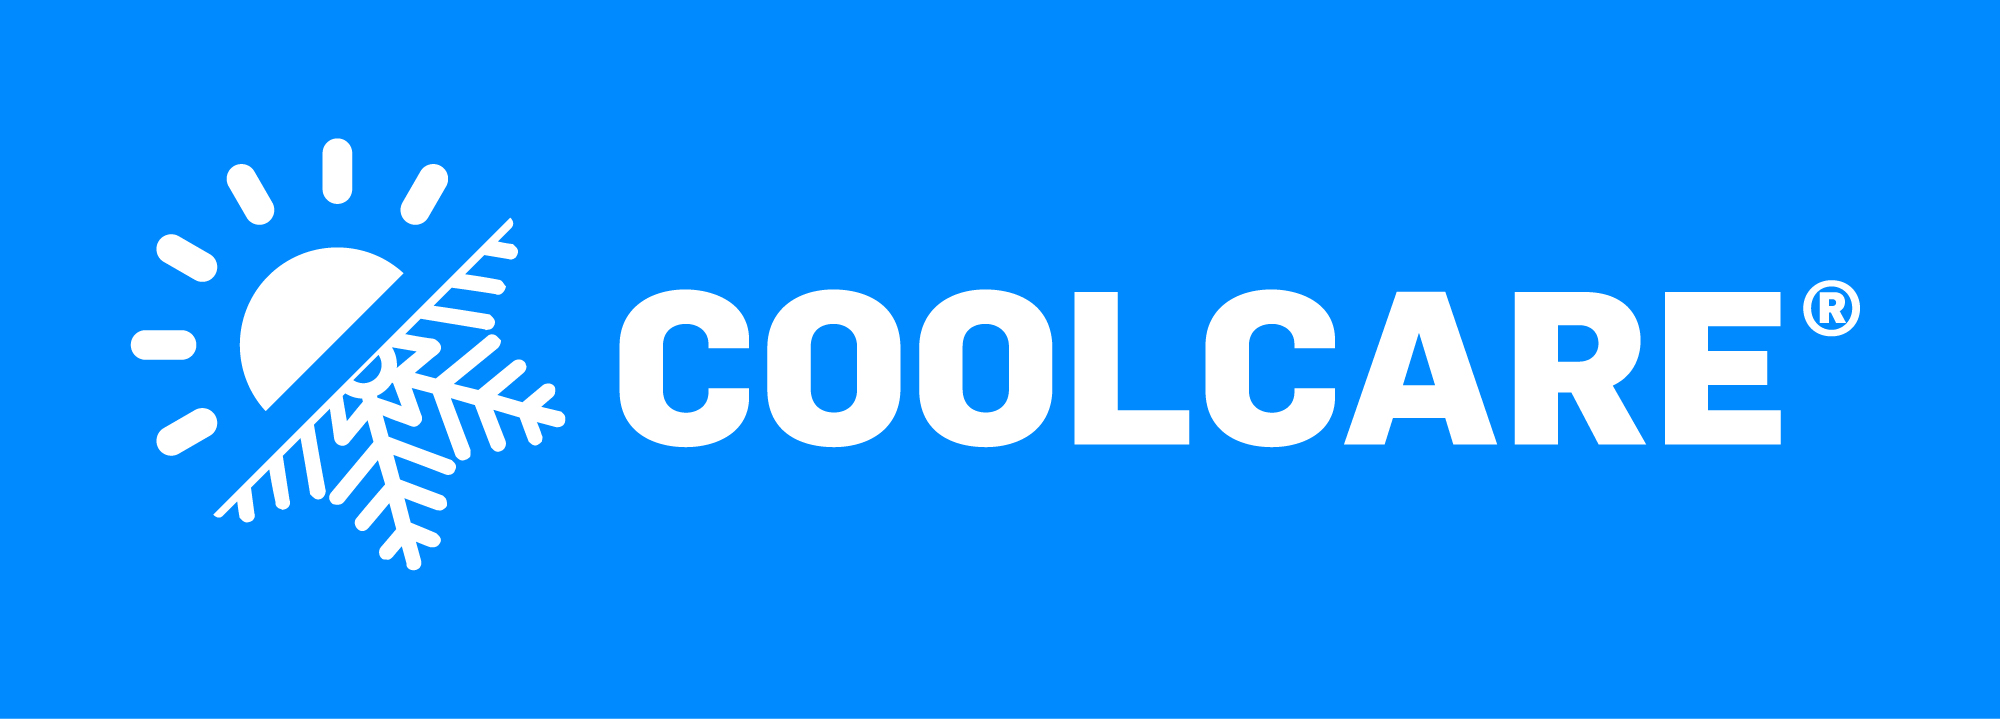 coolcare_logo.jpg